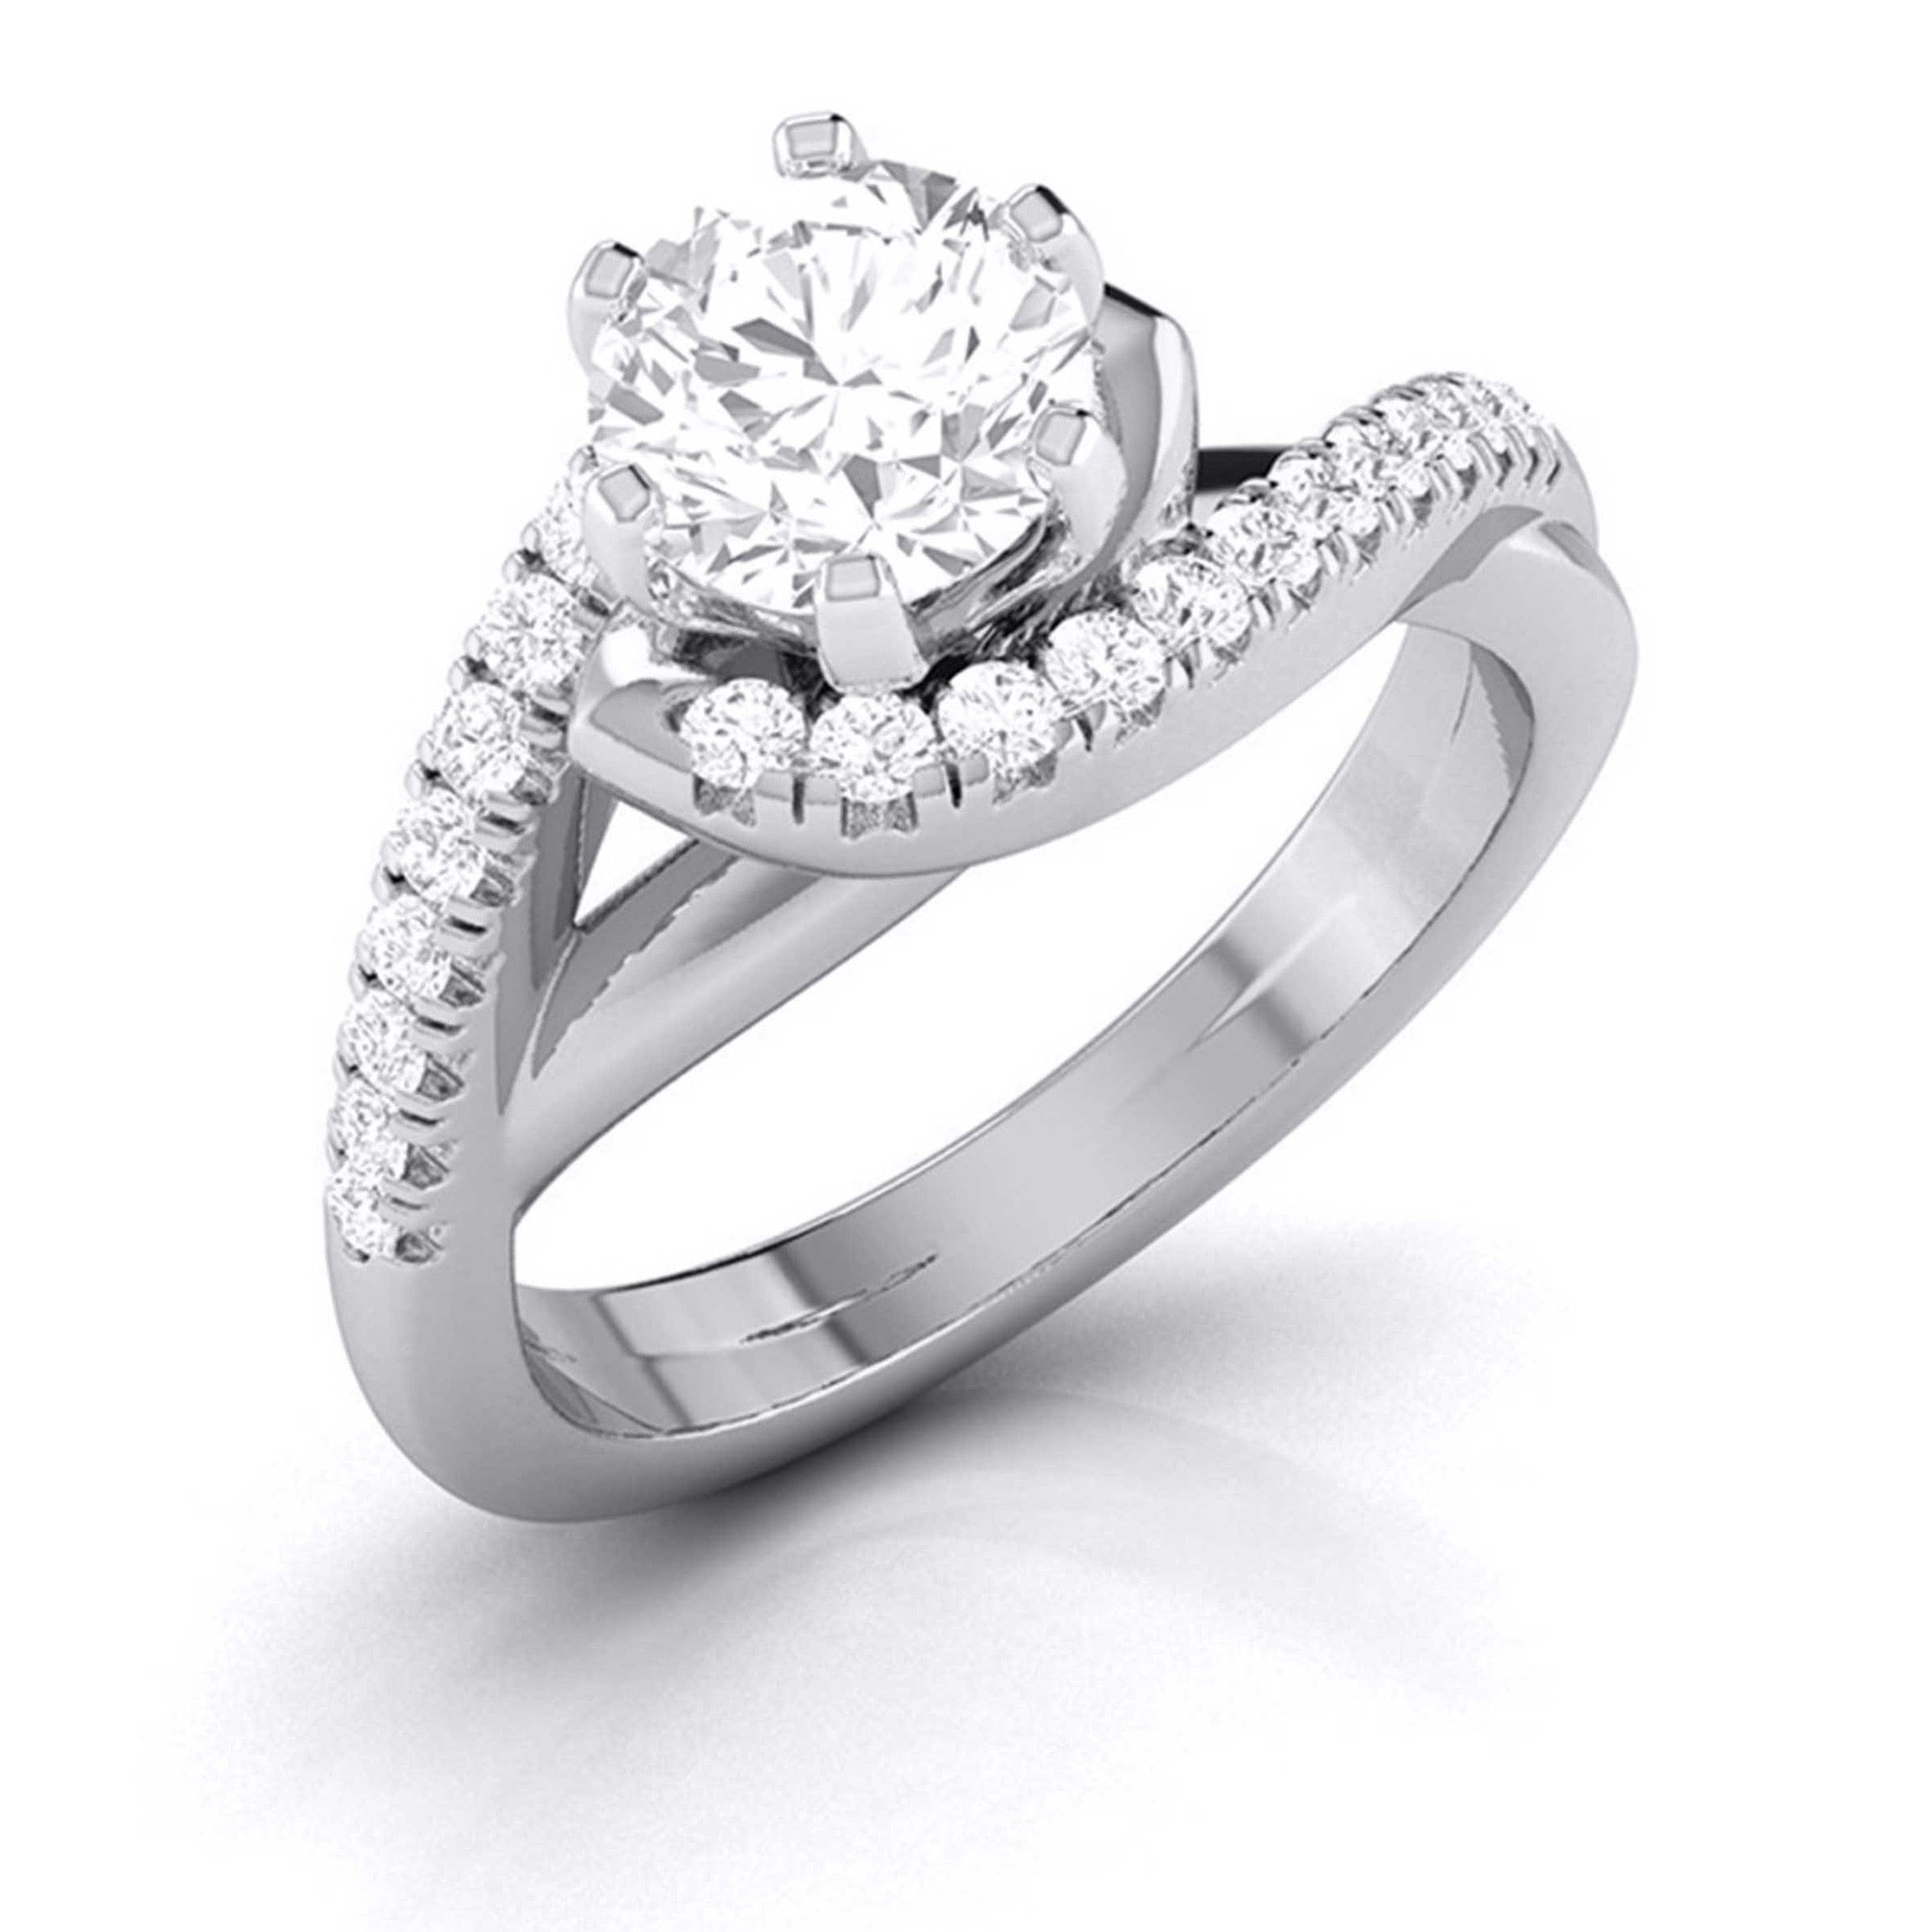 Solitaire ring with a 0.30 carat diamond in platinum - BAUNAT